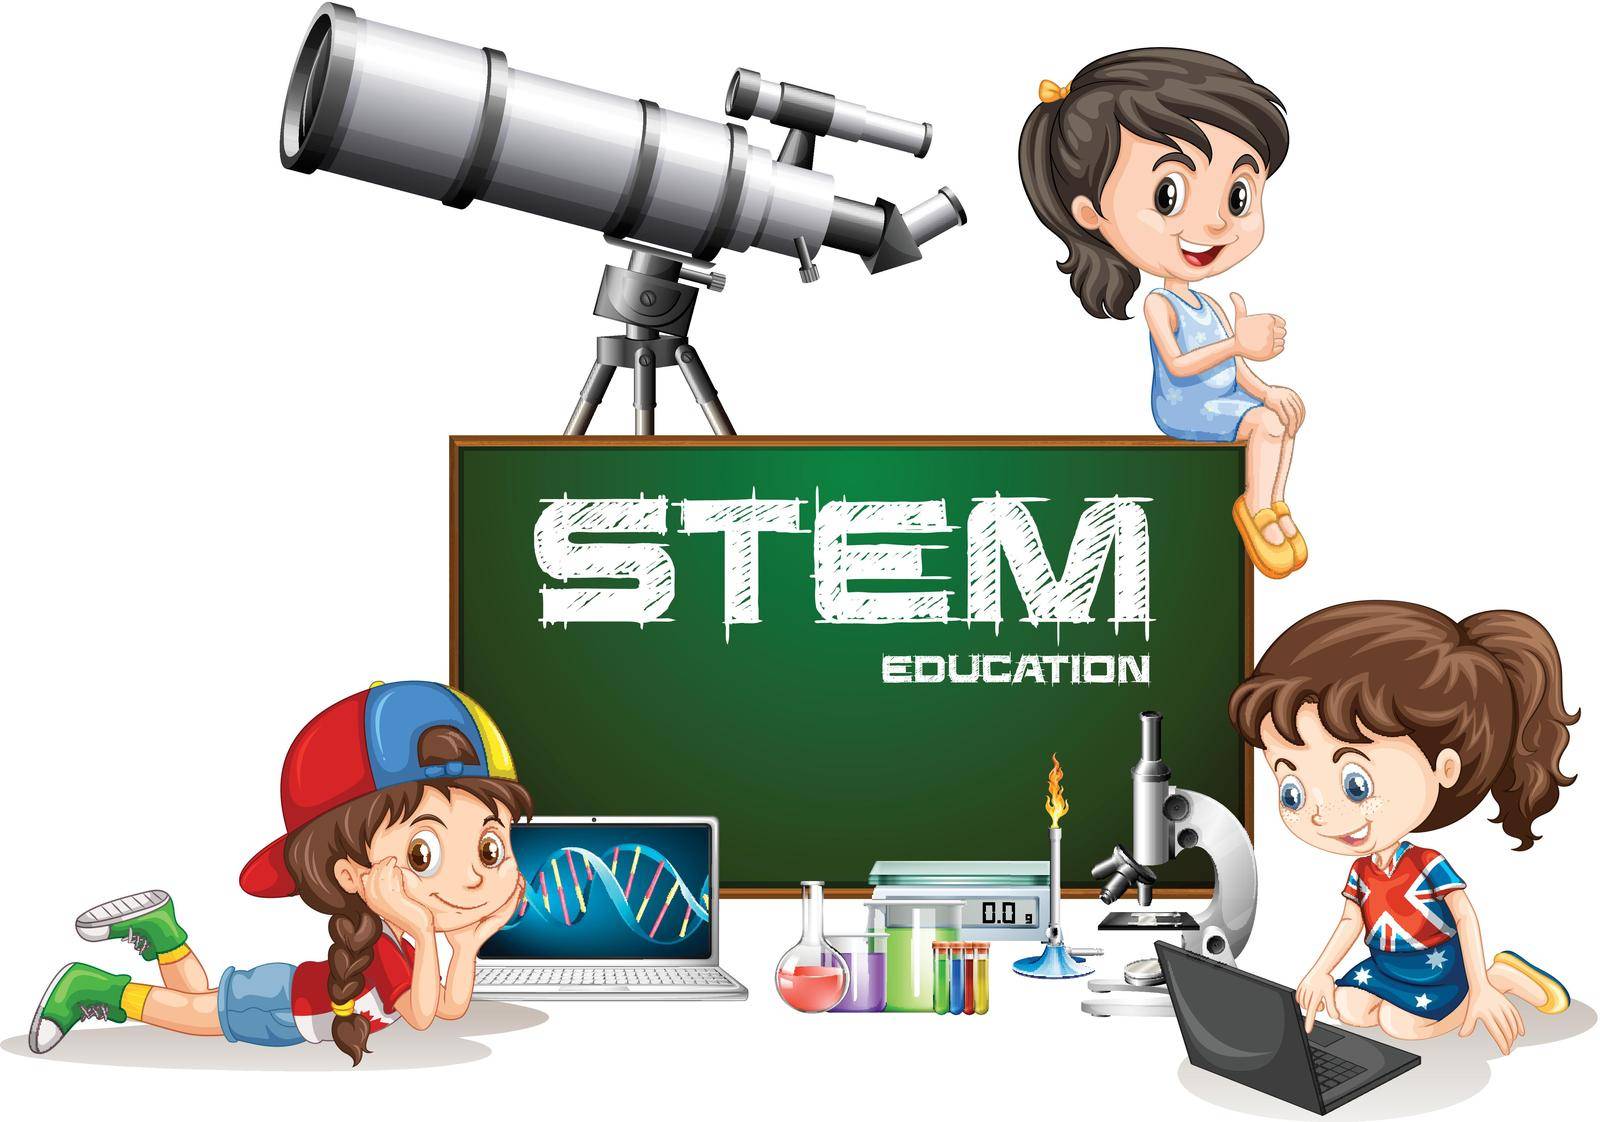 Girls and stem education on board illustration